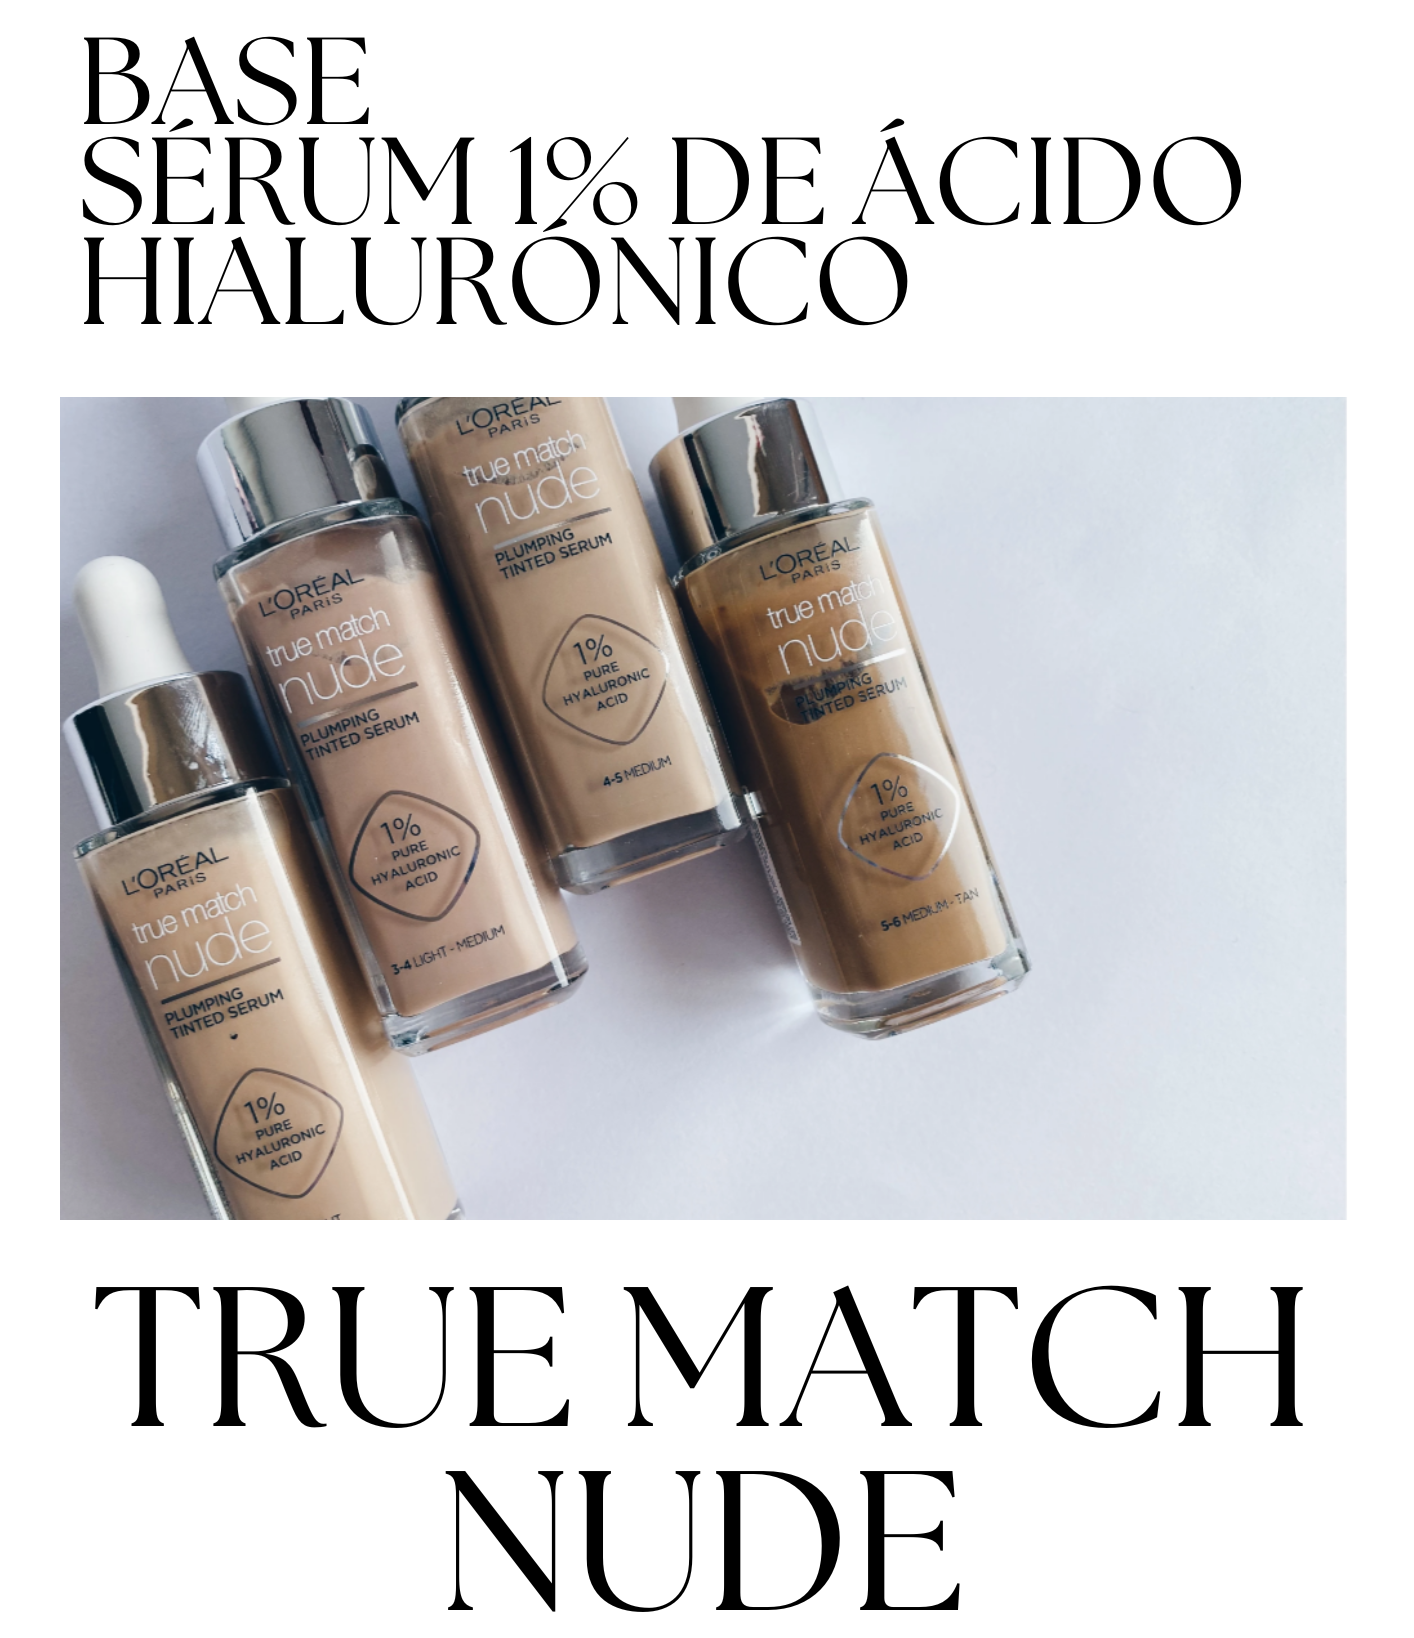 Base True Match Nude serum hialurónico Loreal París es maquillaje o skincare argentina